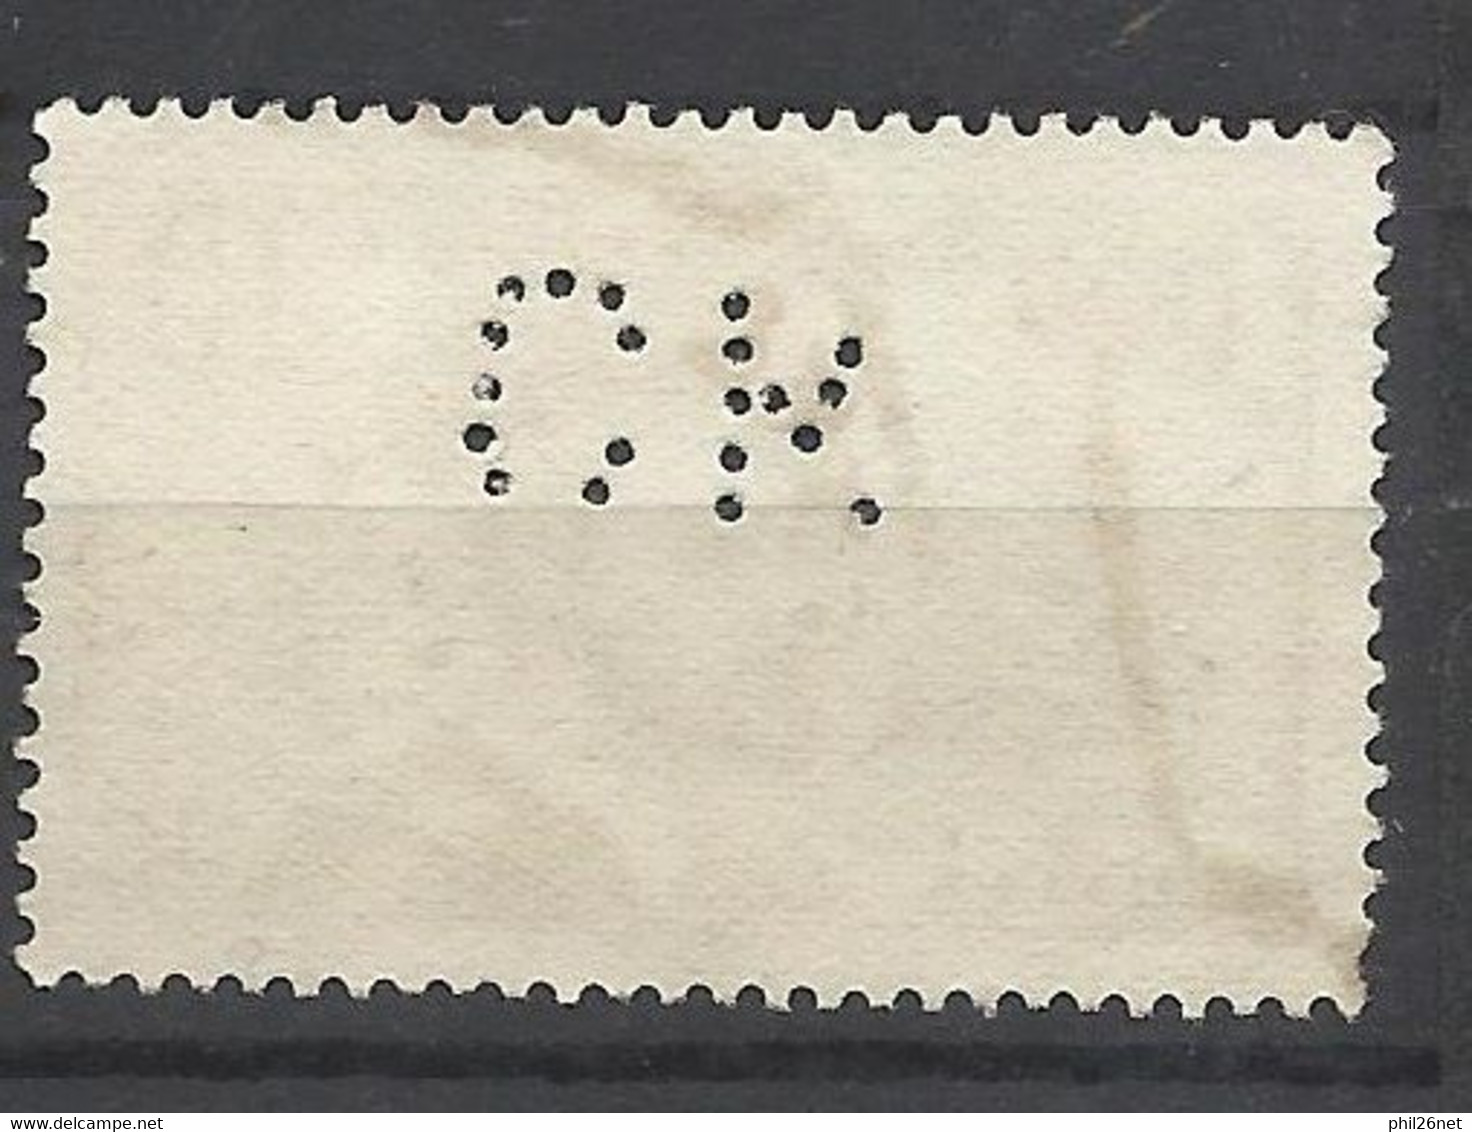 France         N° 297    Perforé   CK.          Oblitéré  B/ TB     Voir Scans  Soldes ! ! ! - Used Stamps